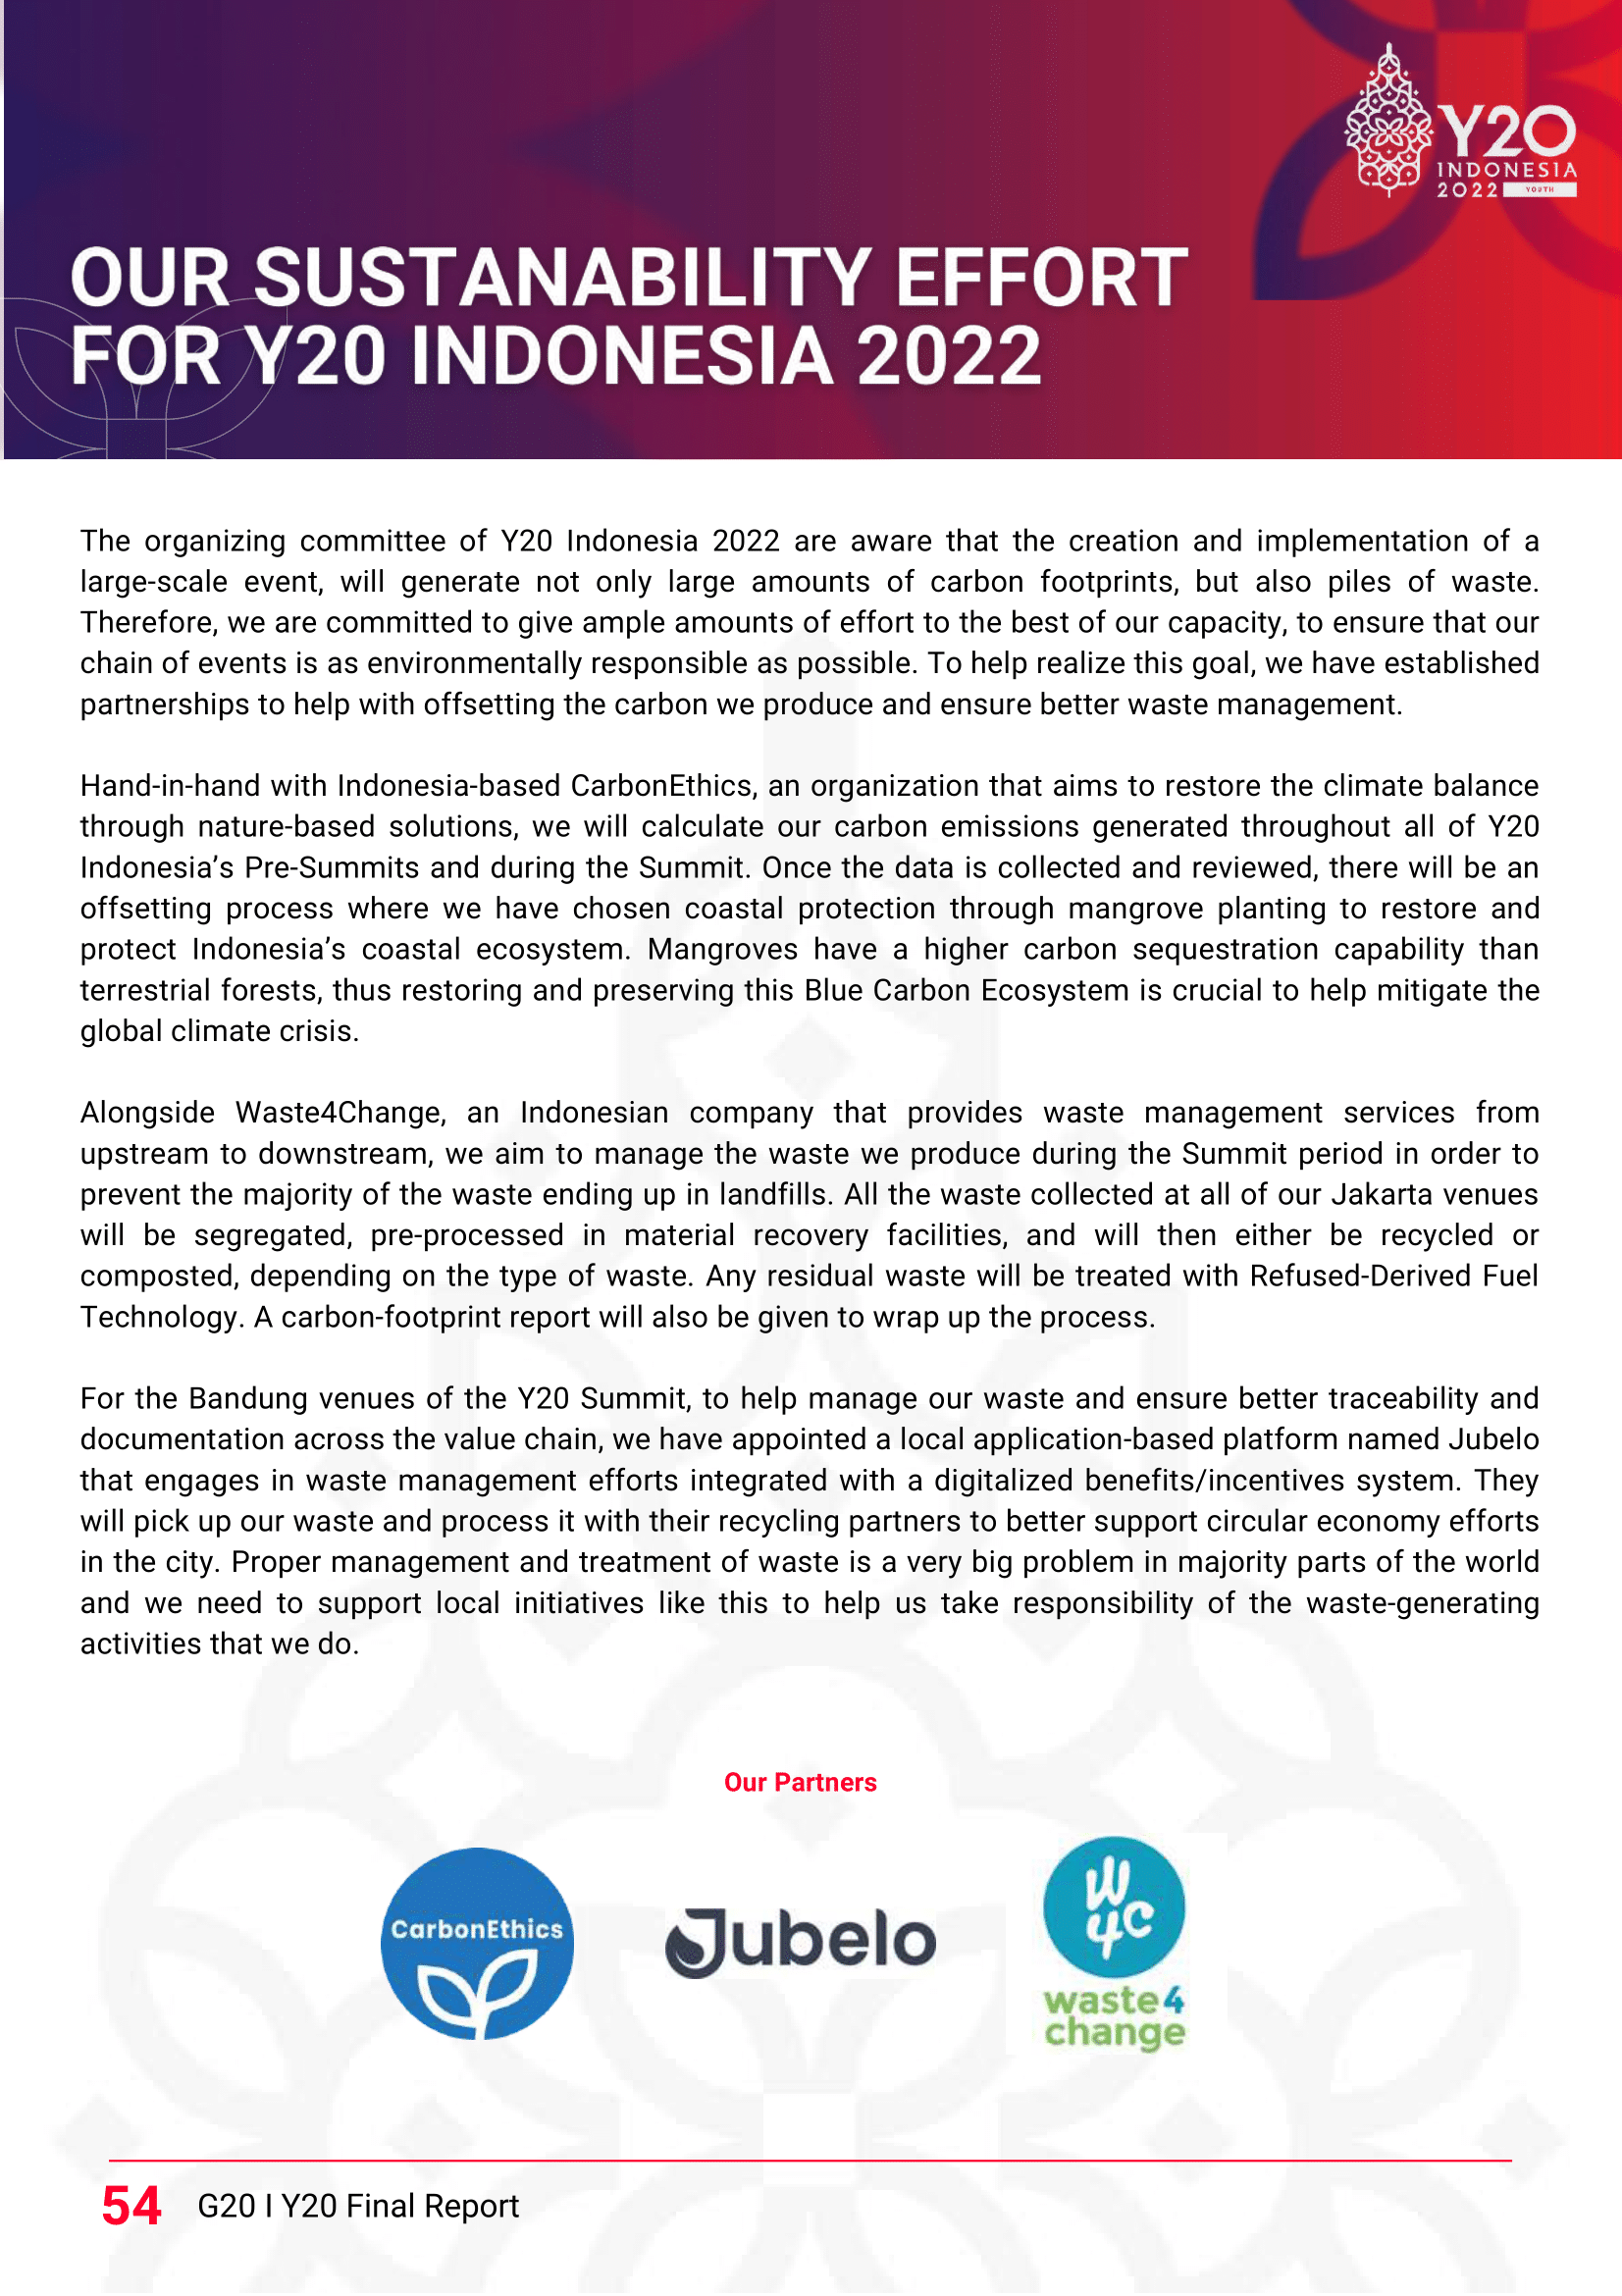 Laporan Y20 Indonesia 2022-2_compressed-56.png